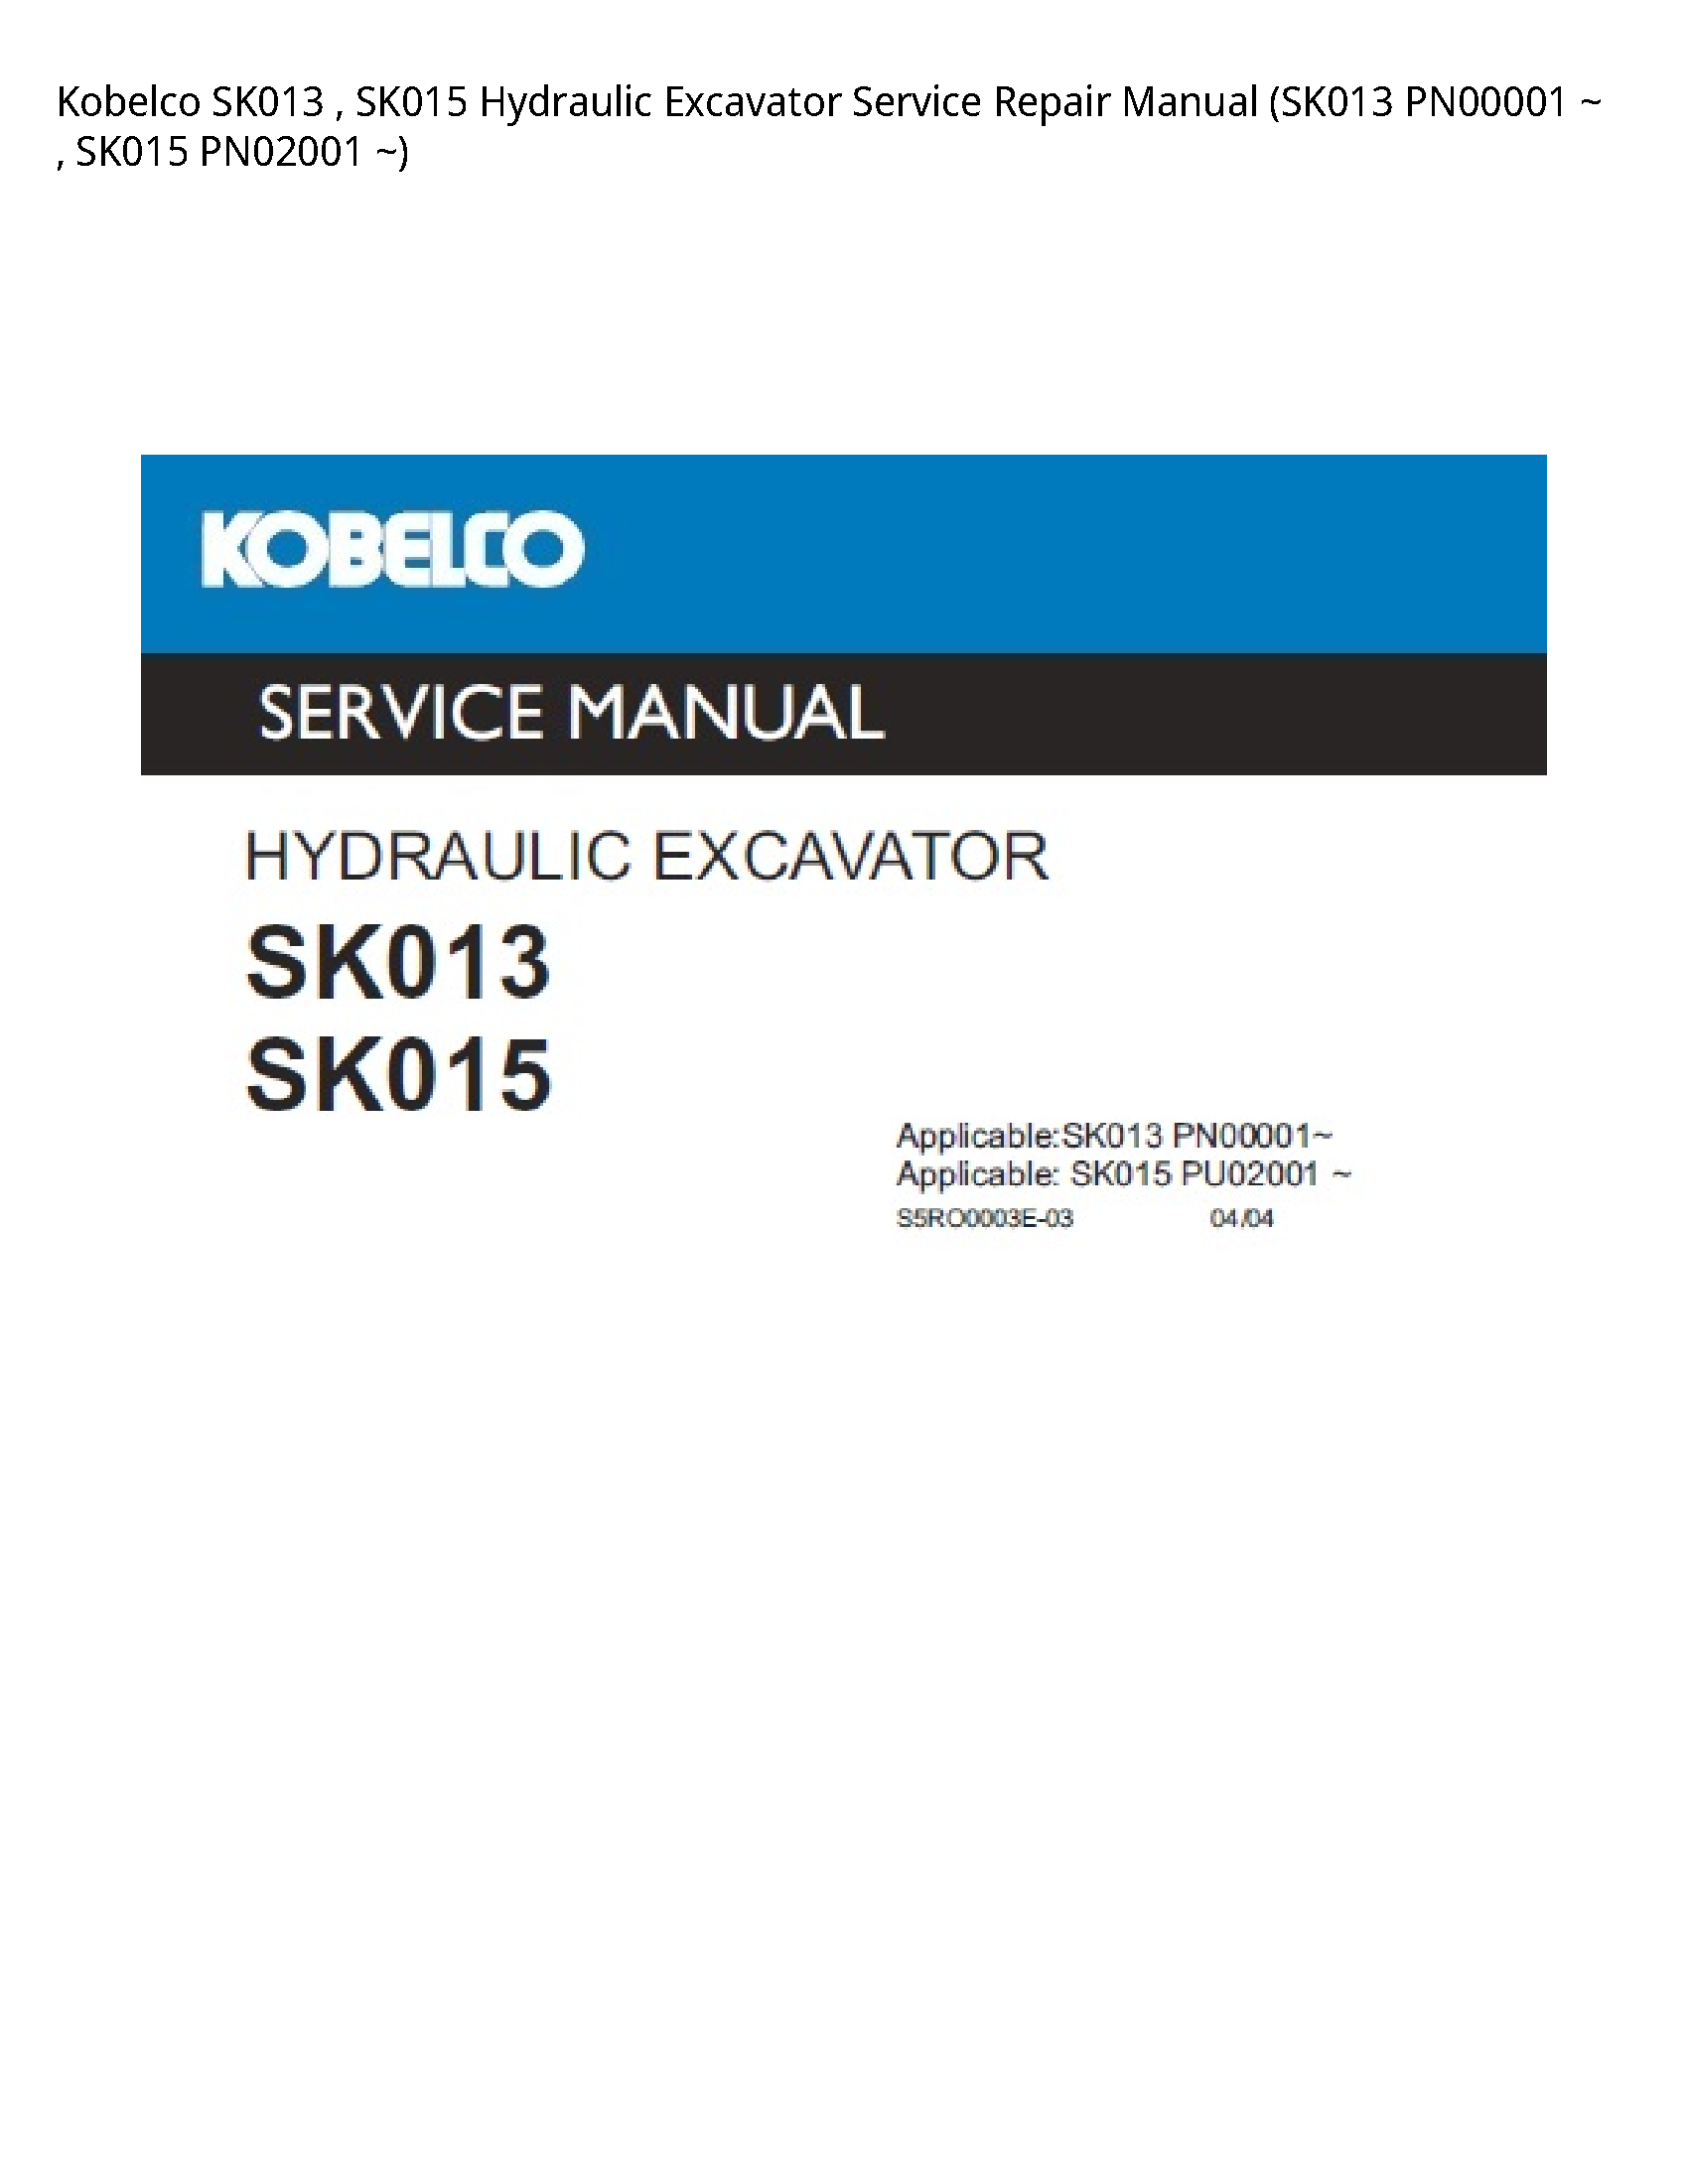 Kobelco SK013 Hydraulic Excavator manual